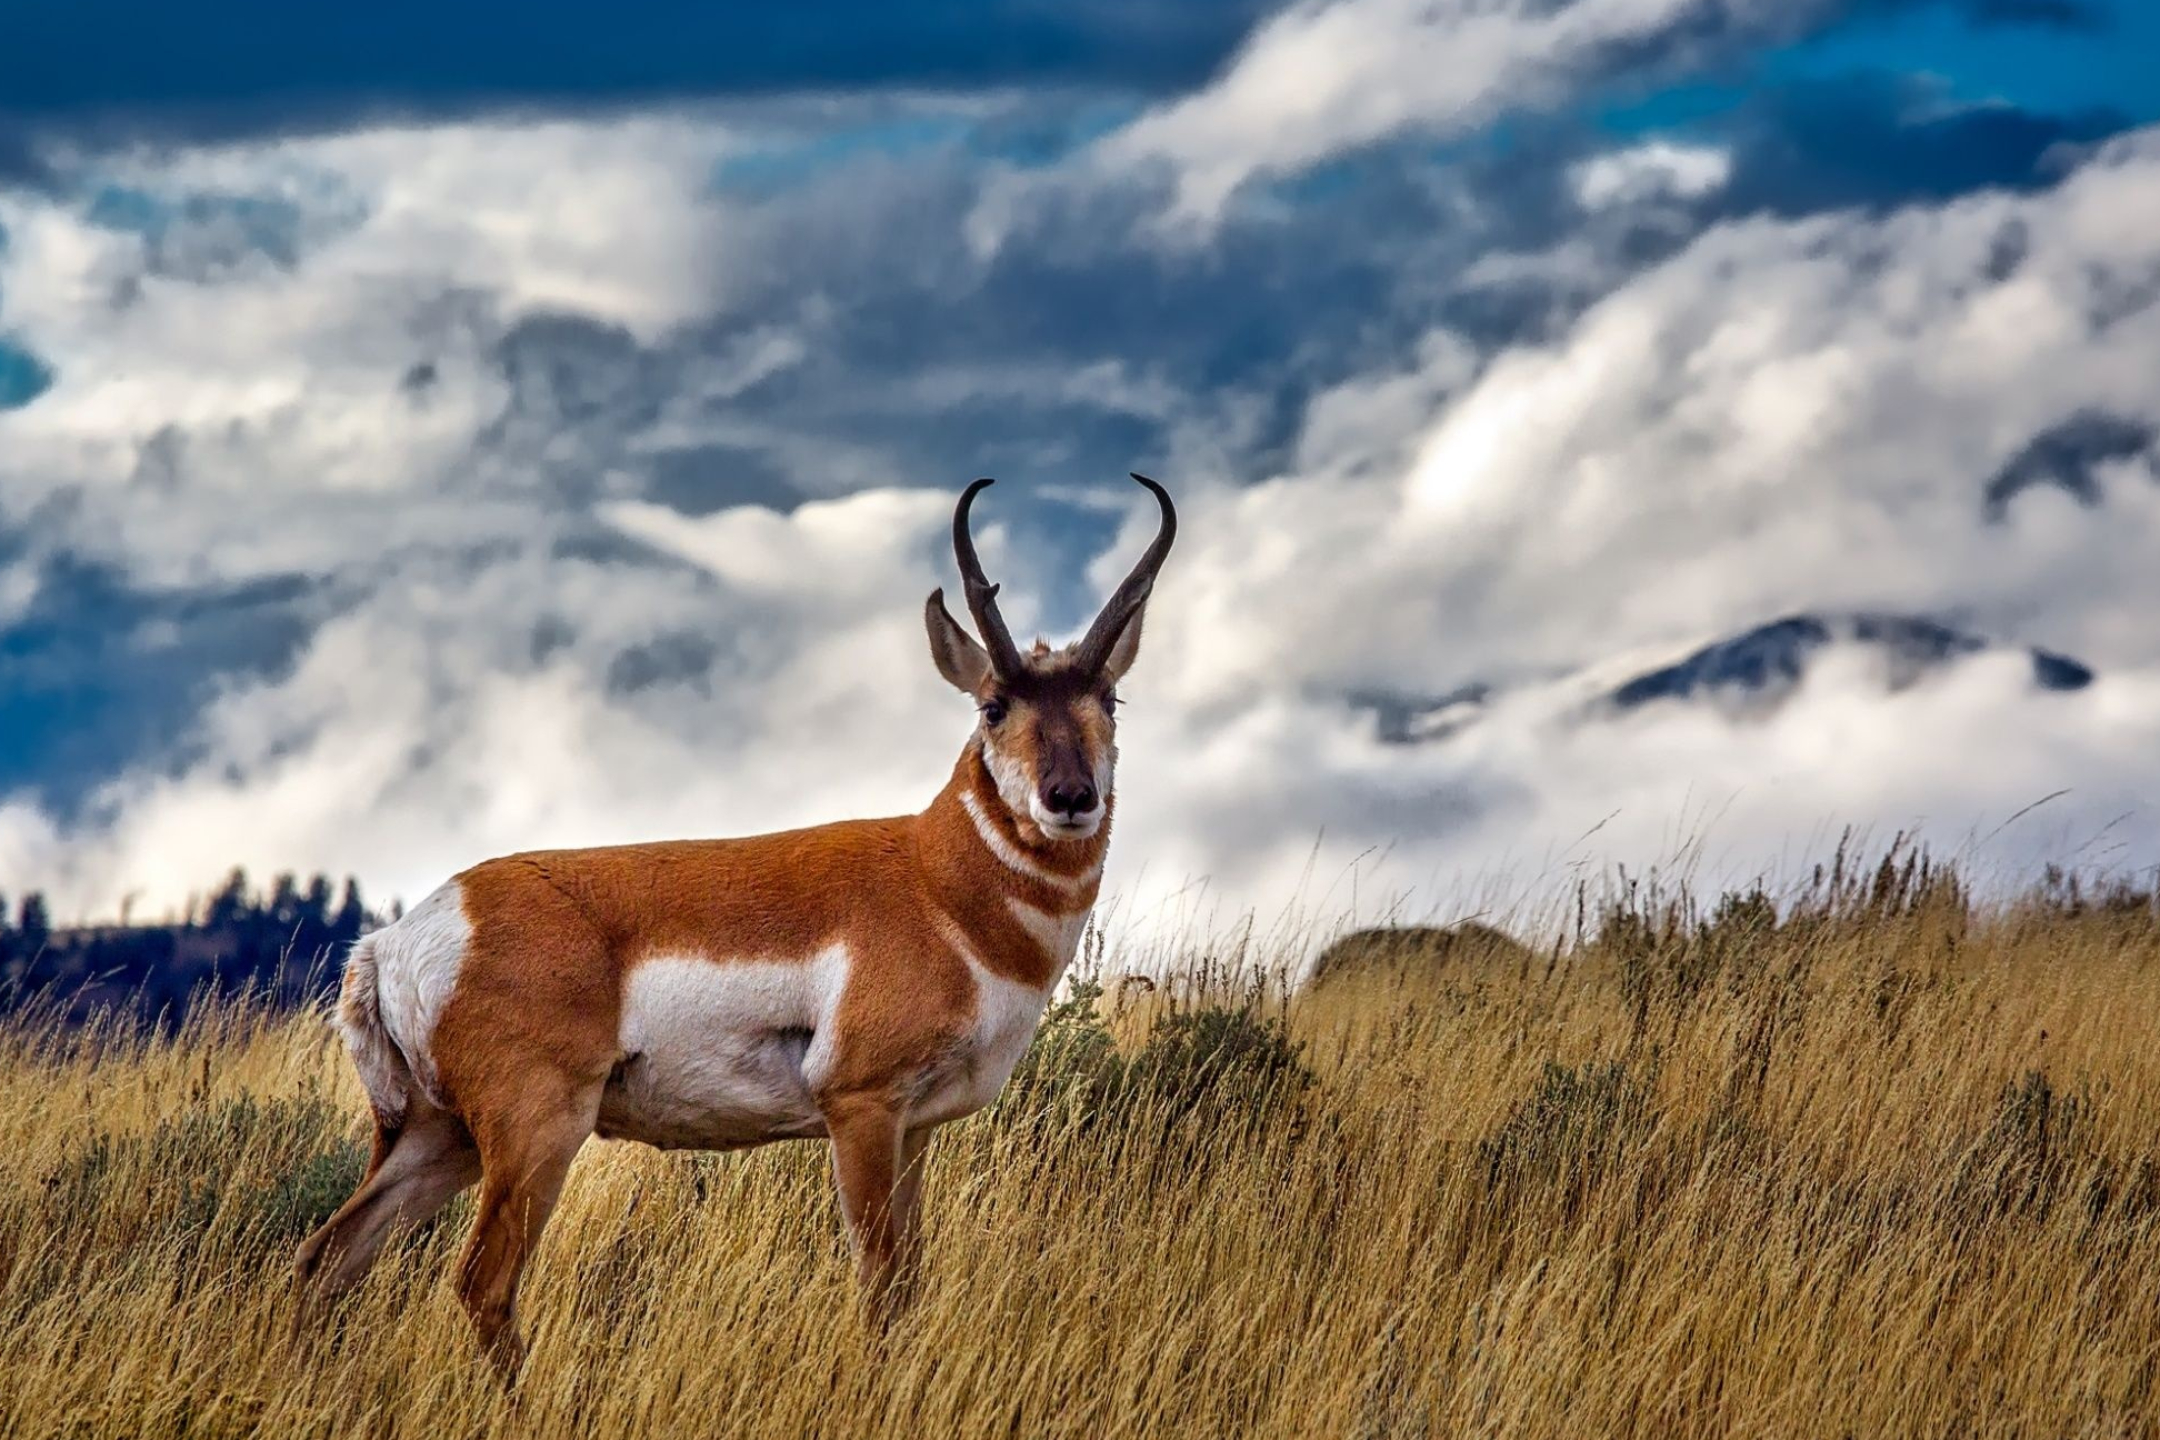 Antelope wallpapers, Stunning backgrounds, Nature's beauty, Wildlife photography, 2160x1440 HD Desktop